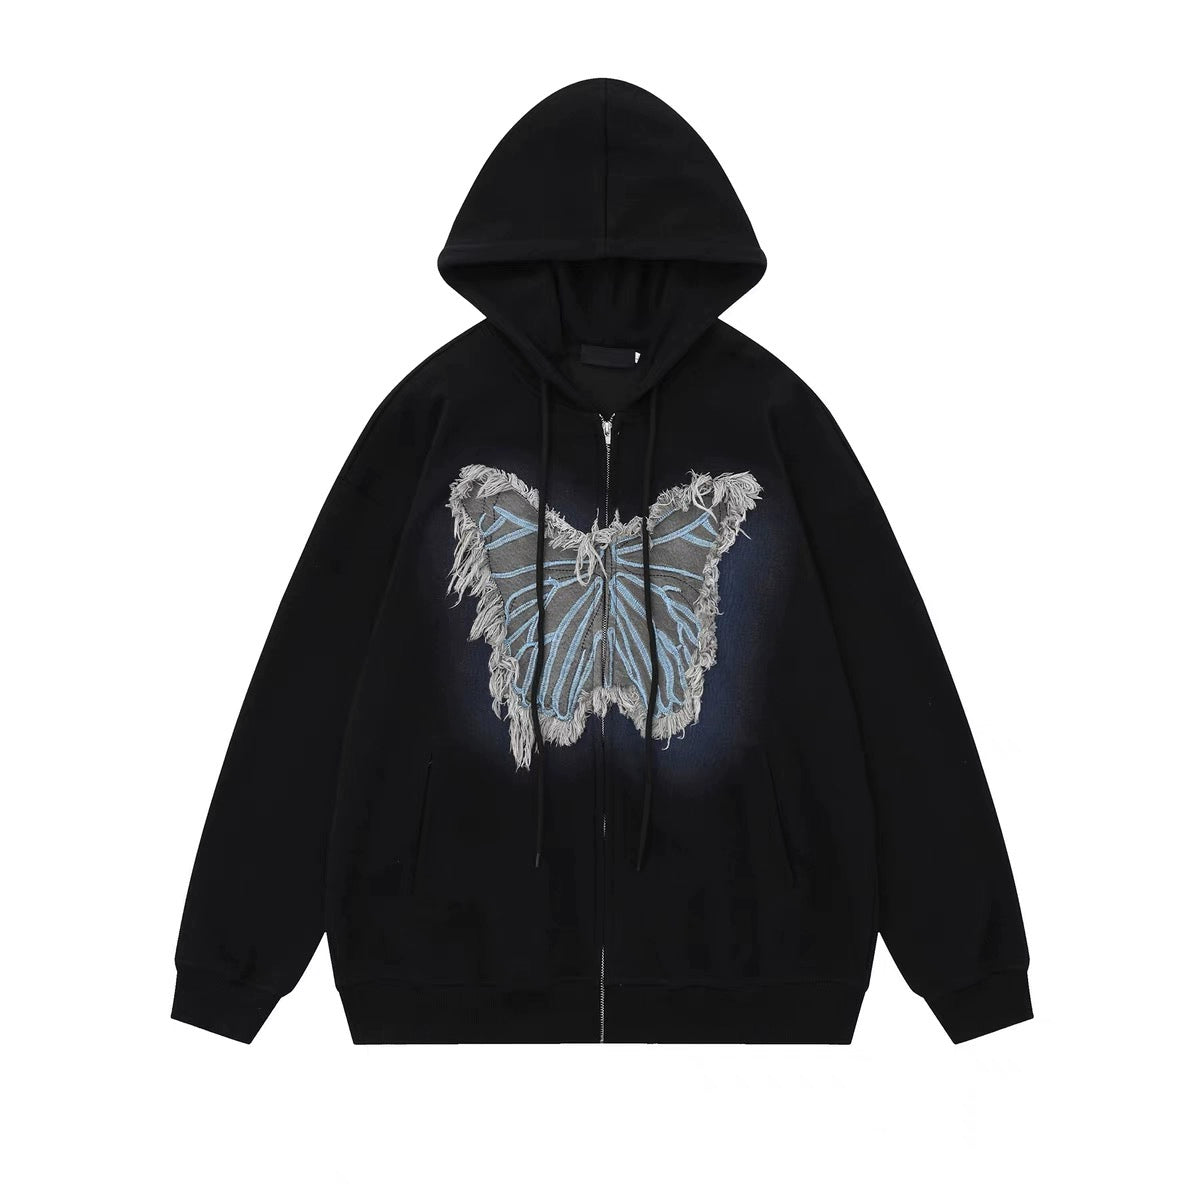 Backlit butterfly design glitch hoodie  HL2963